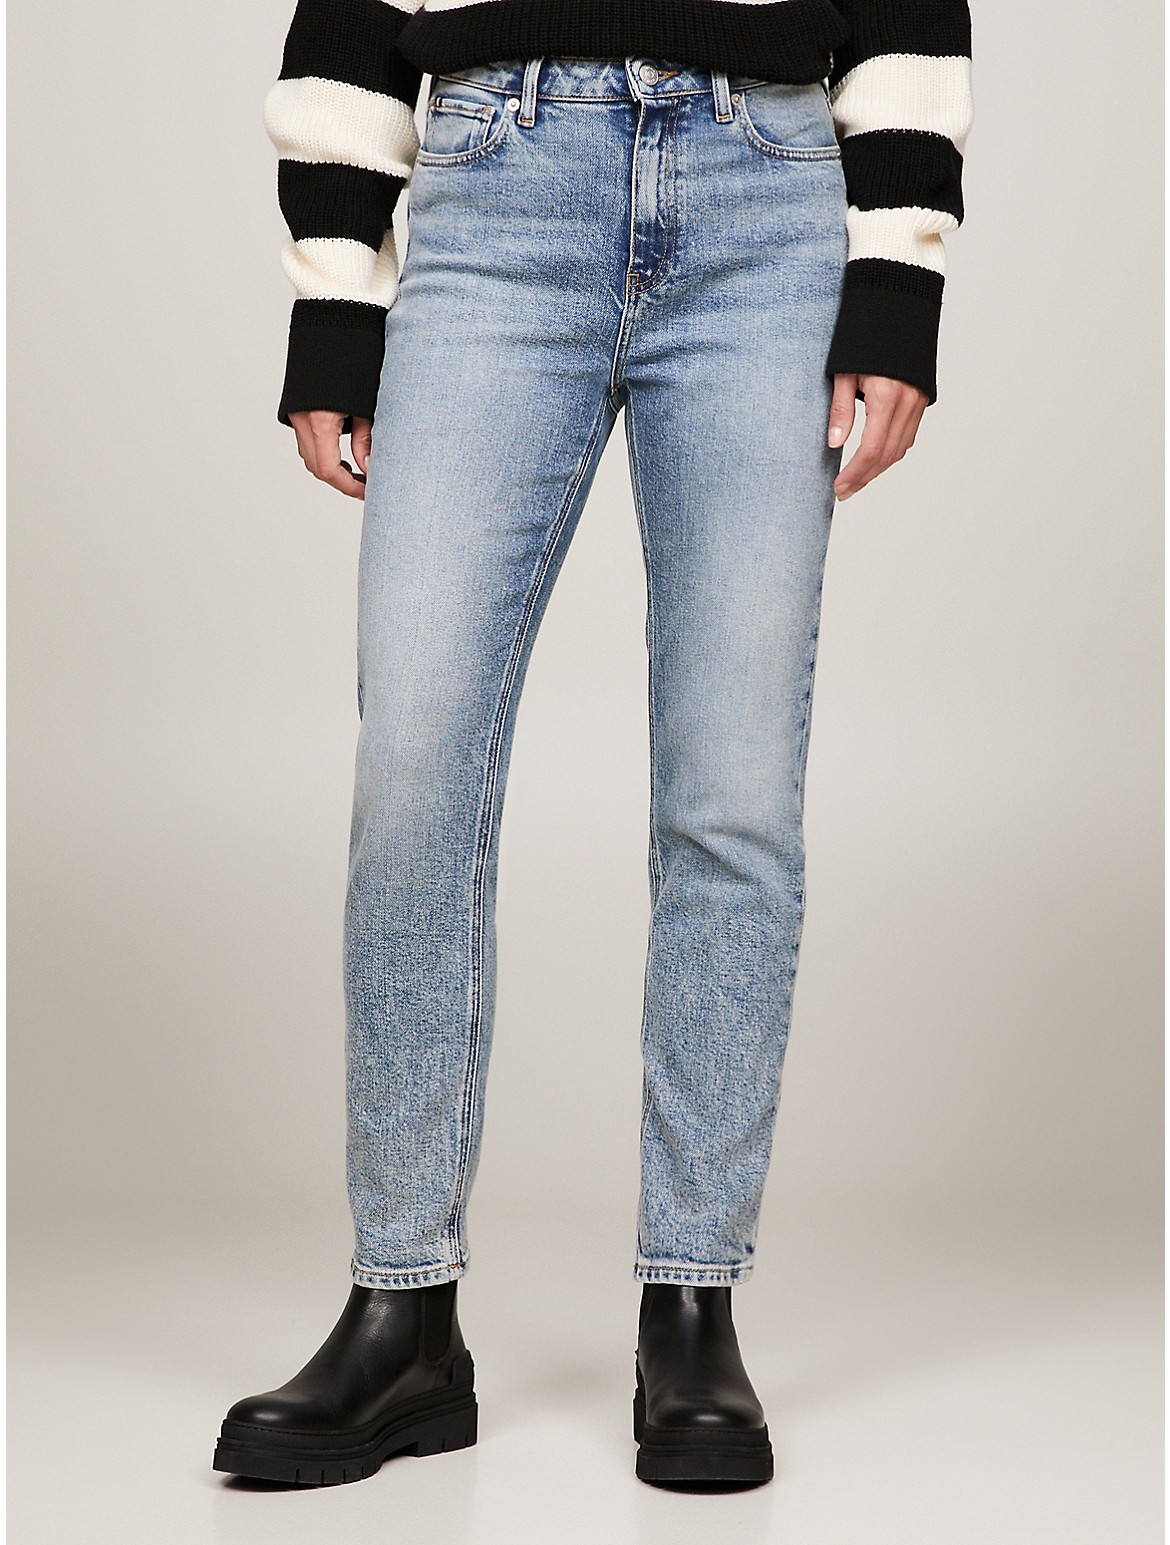 Tommy Hilfiger Women's High-Waist Straight Fit Light Wash Jean